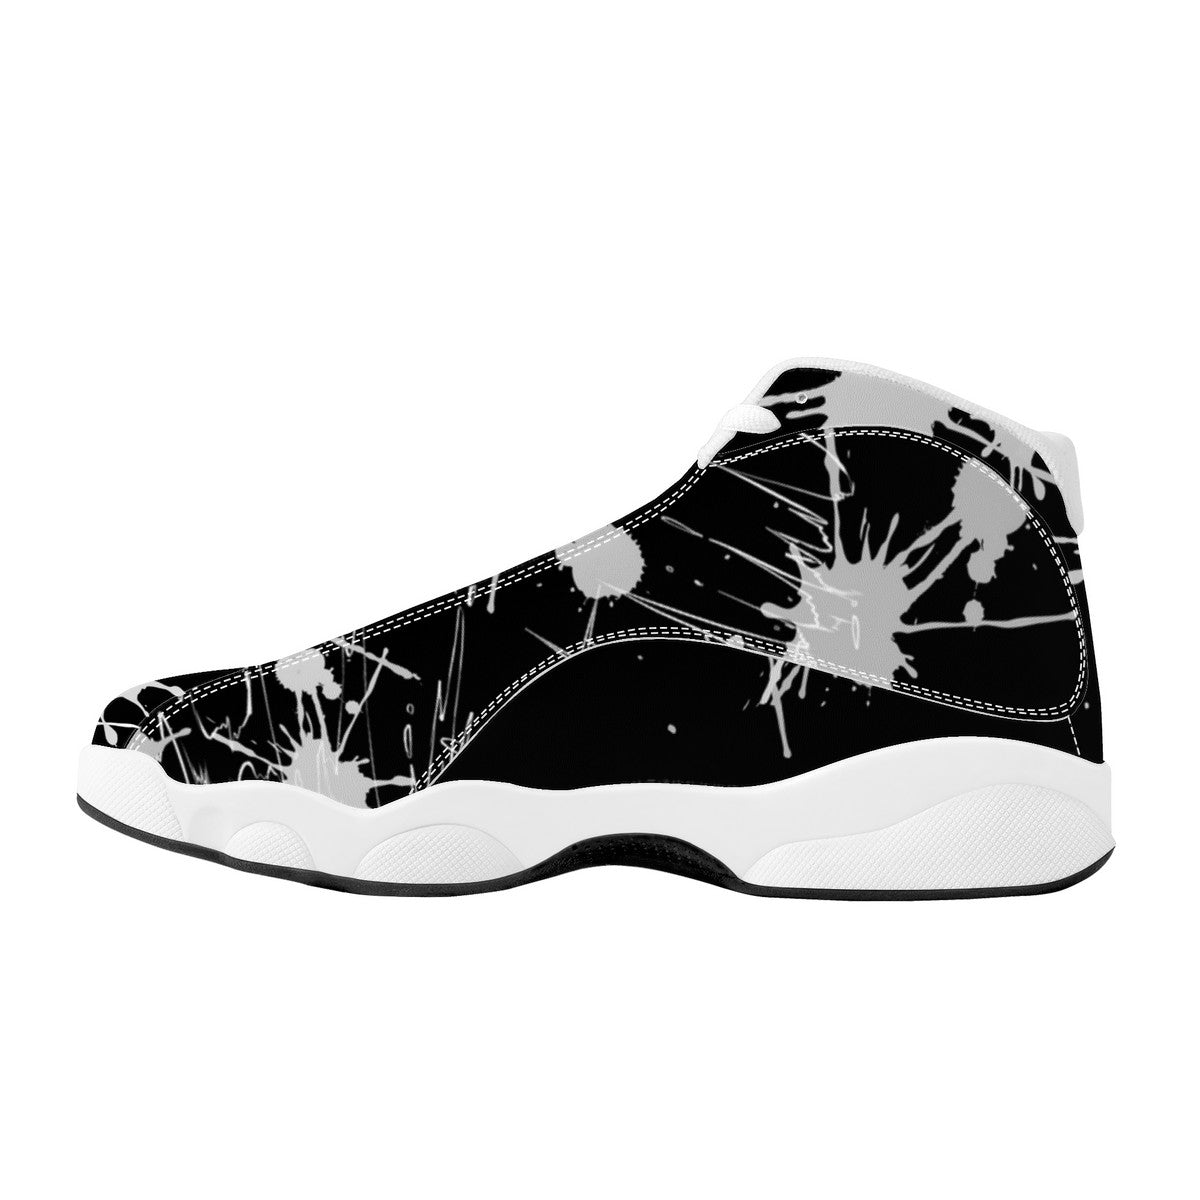 RVT Basketball Shoes -White Drip